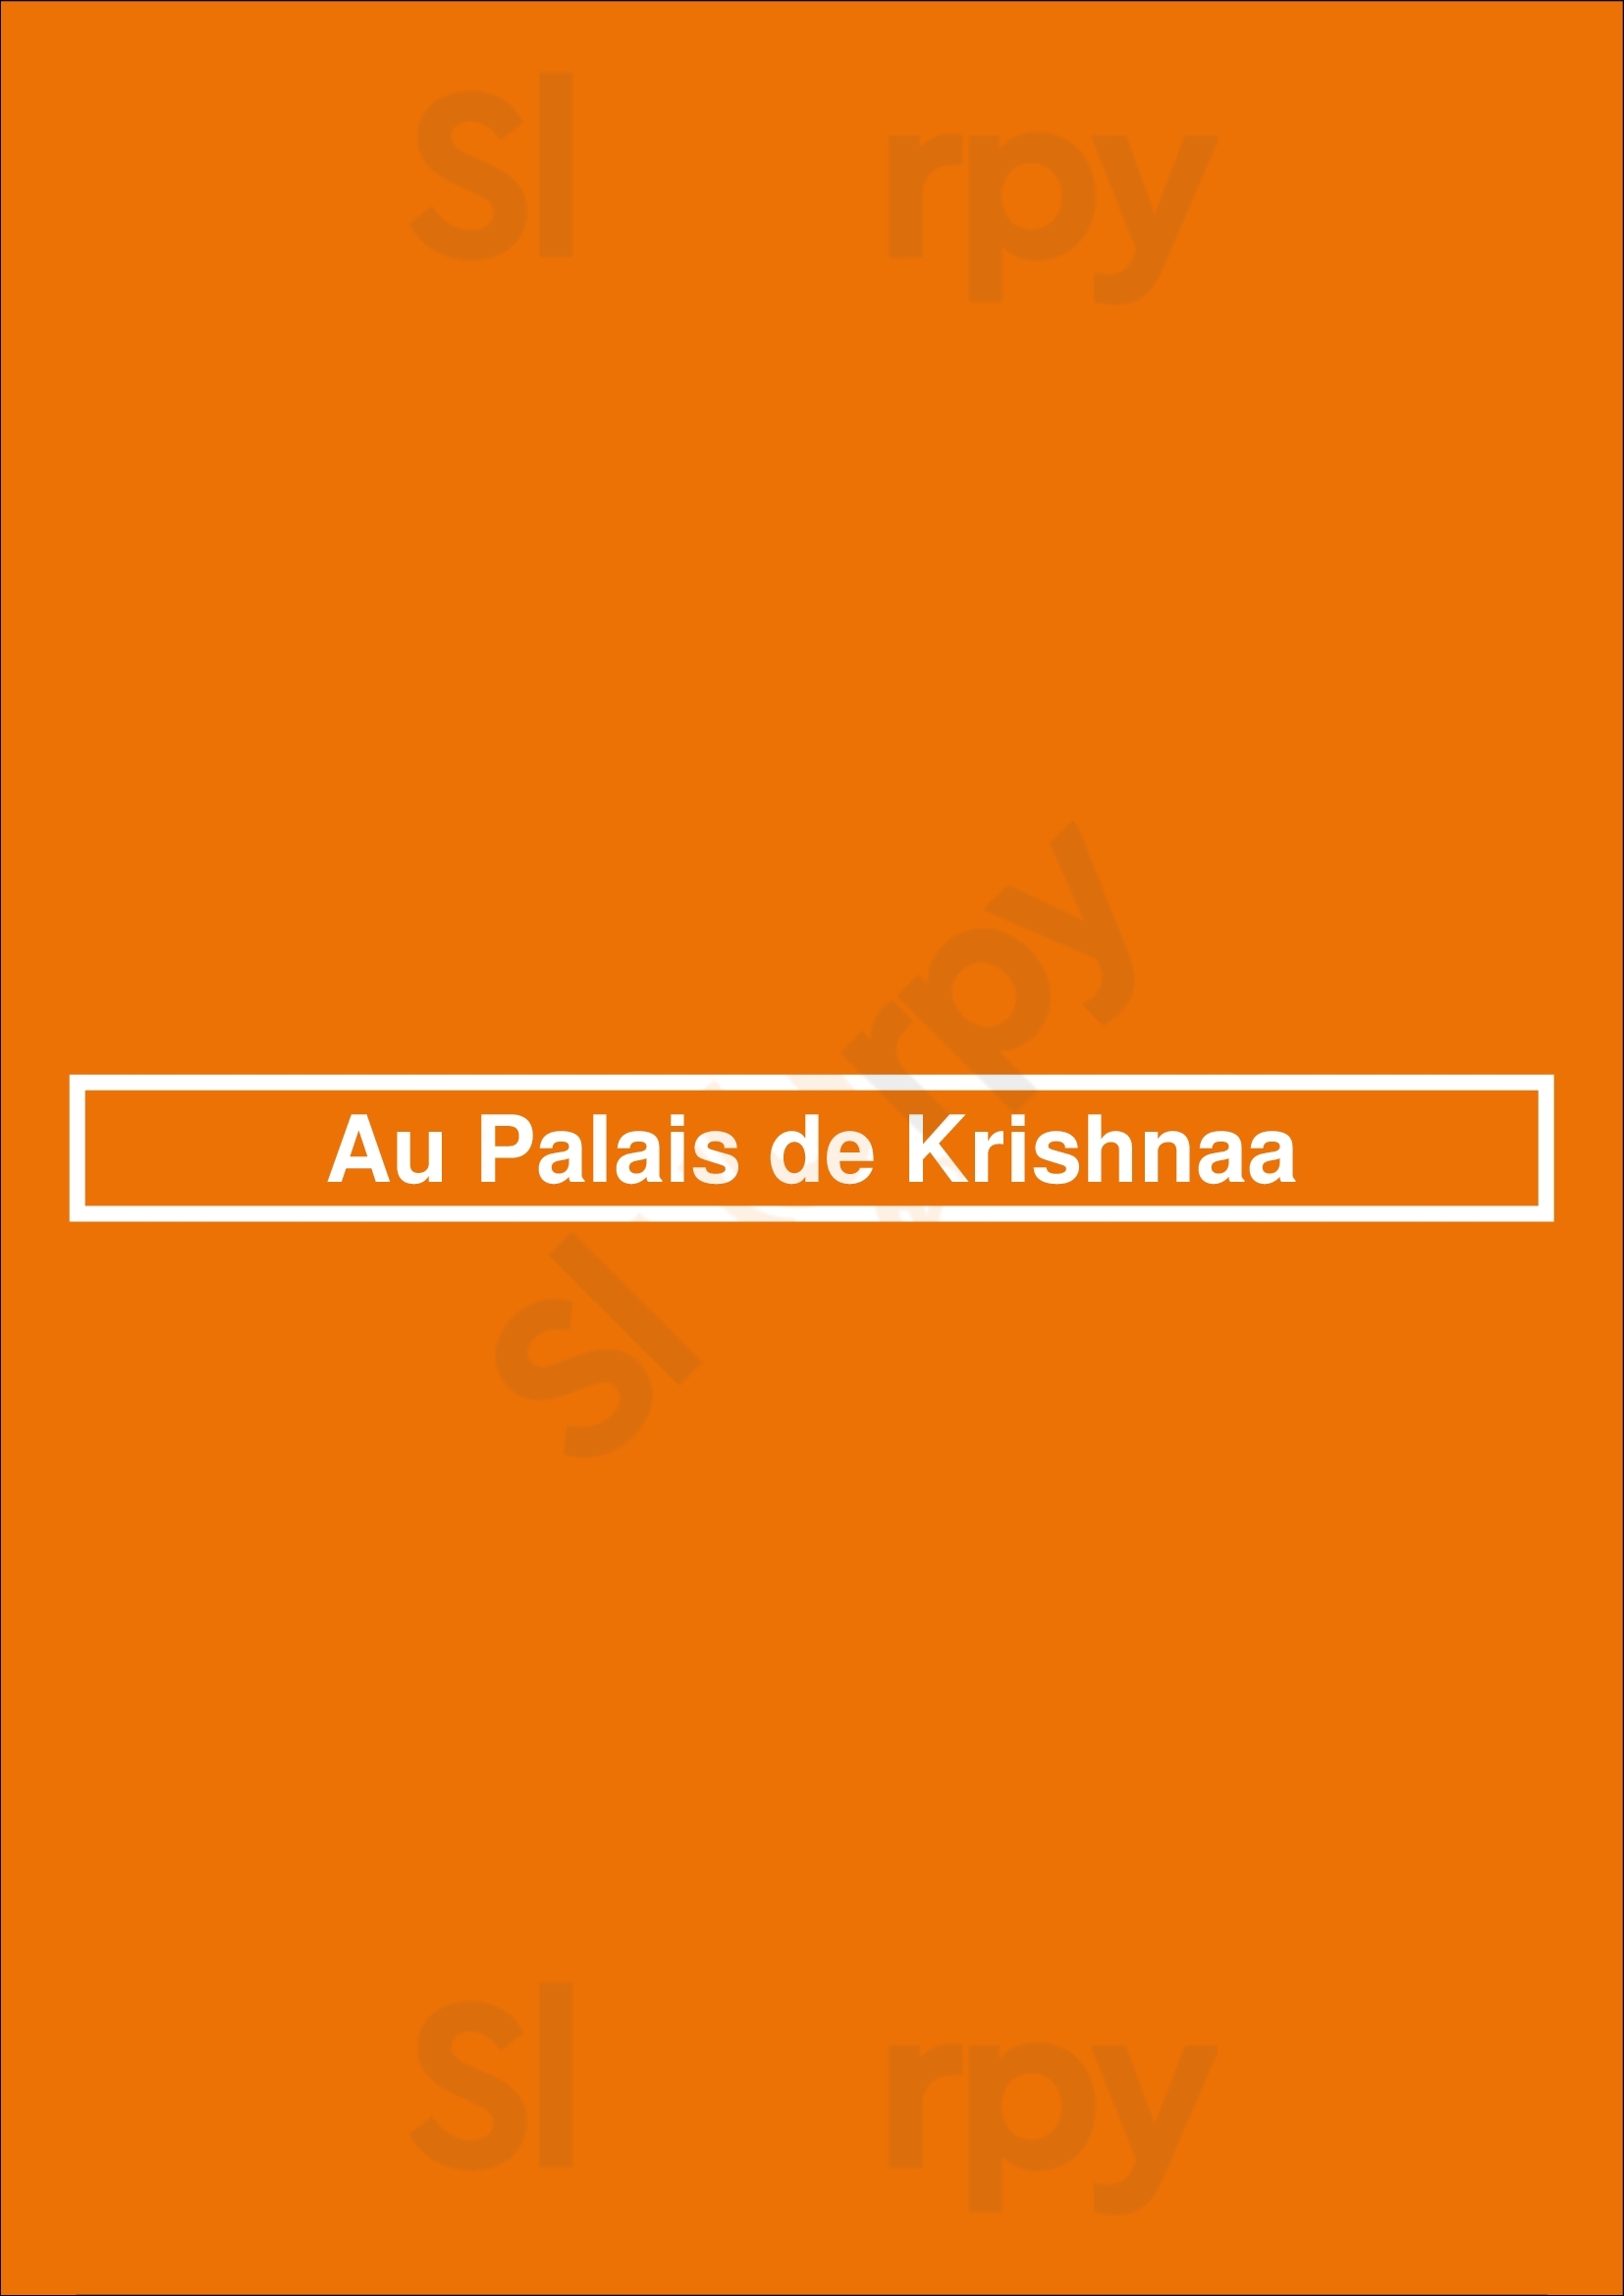 Station Krishna Paris Menu - 1